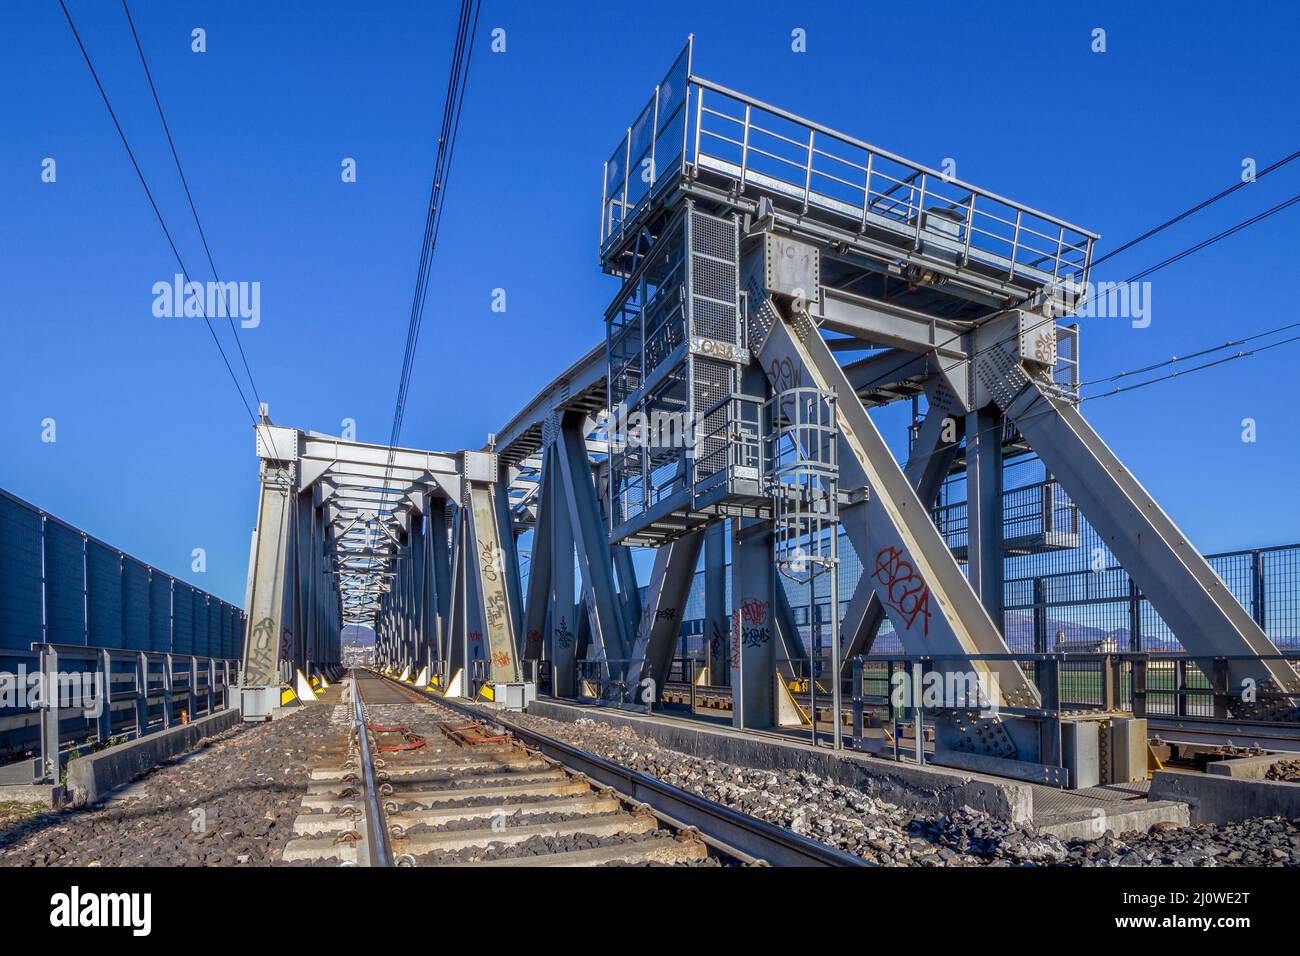 Railroad bridge Stock Photo